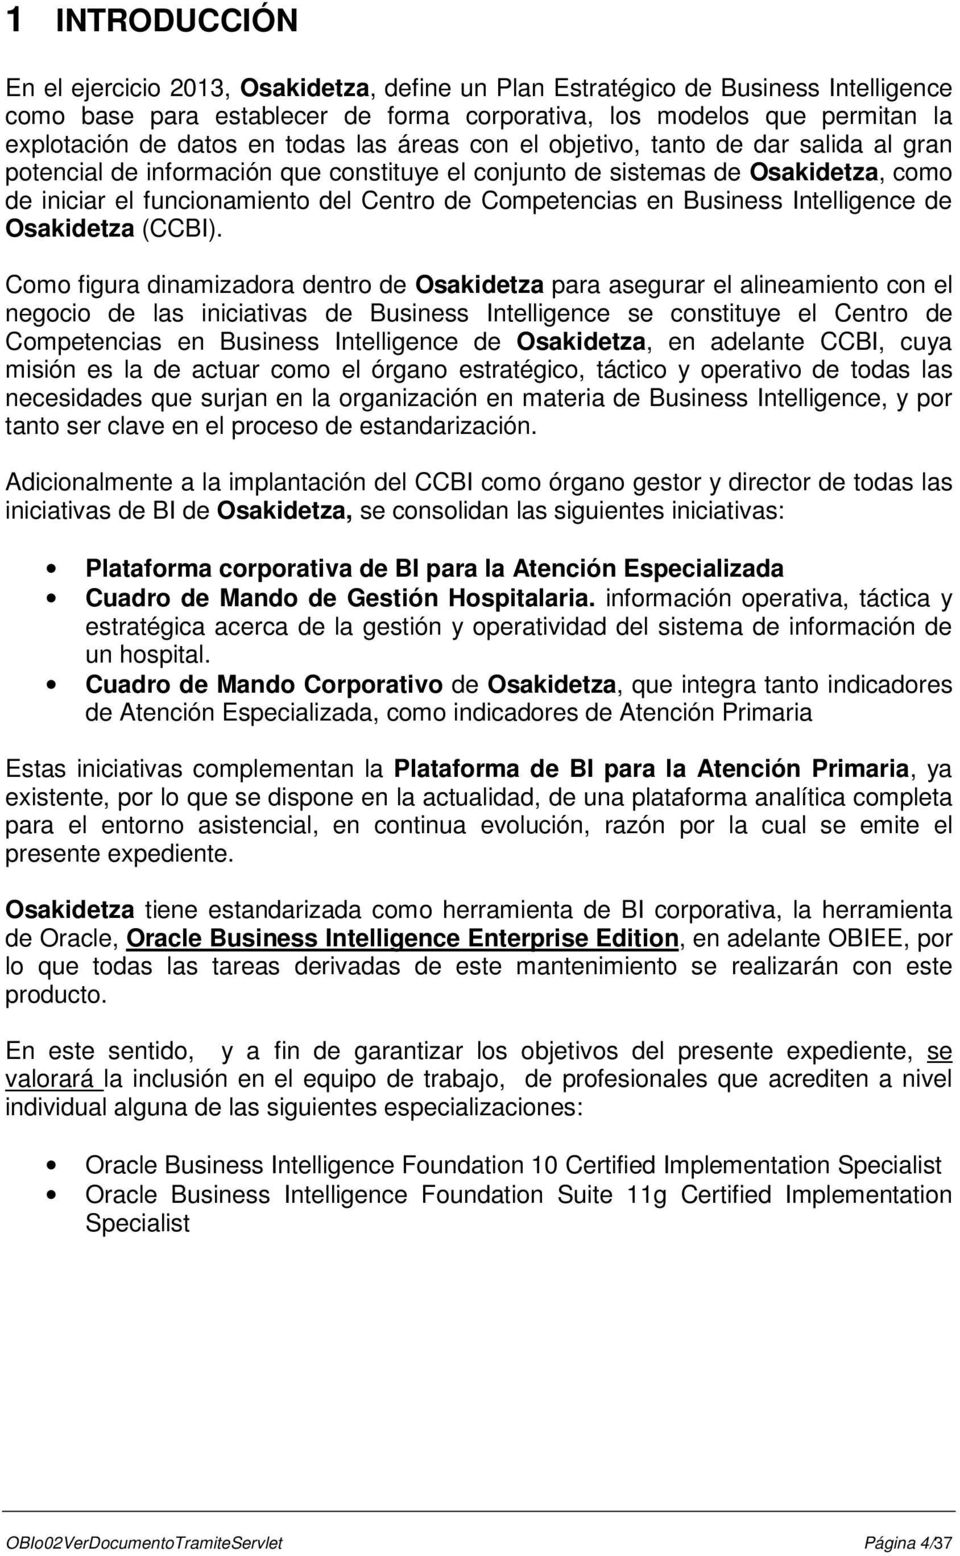 Competencias en Business Intelligence de Osakidetza (CCBI).